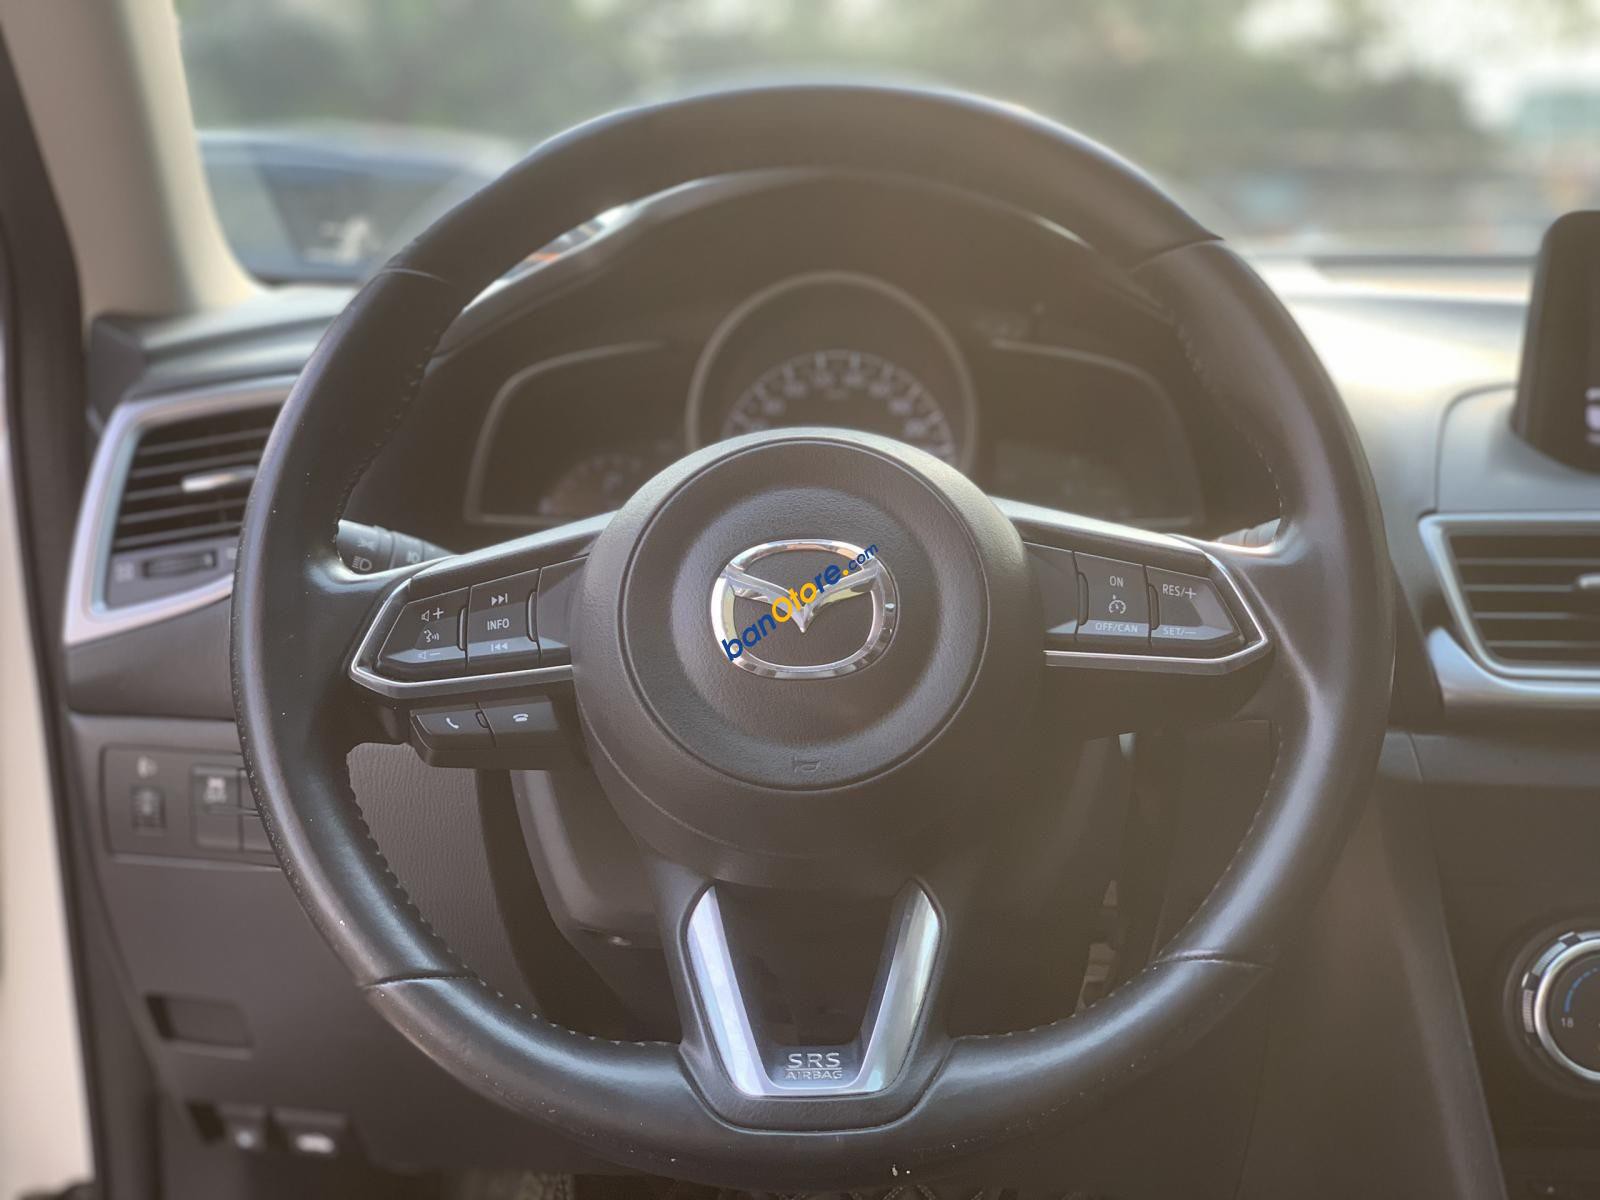 Mazda 3 2017 - Xe đẹp, biển thành phố, hỗ trợ bank 70% giá trị xe